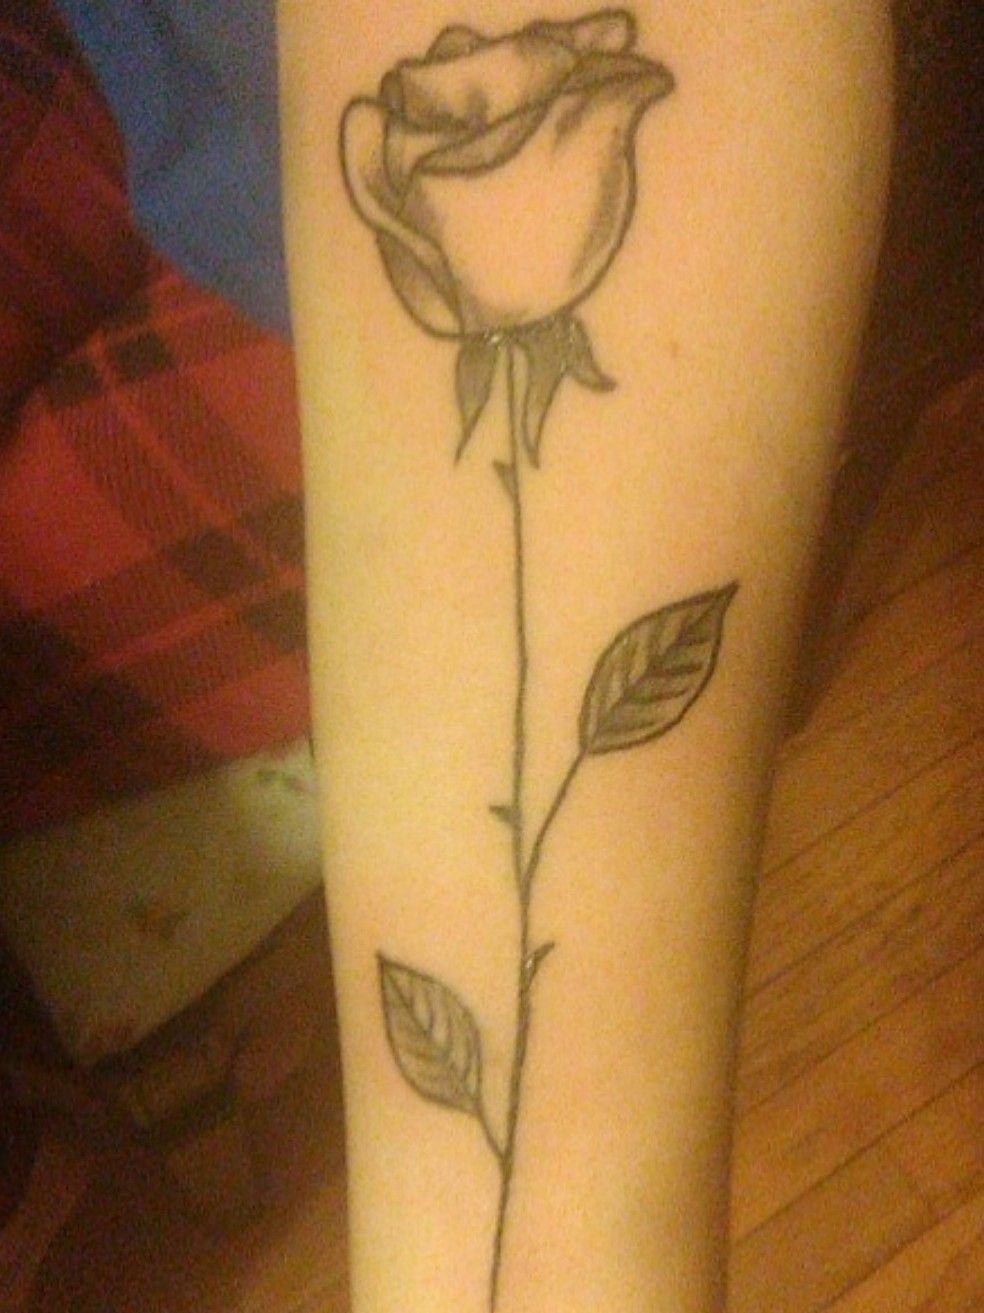 single yellow rose tattoo